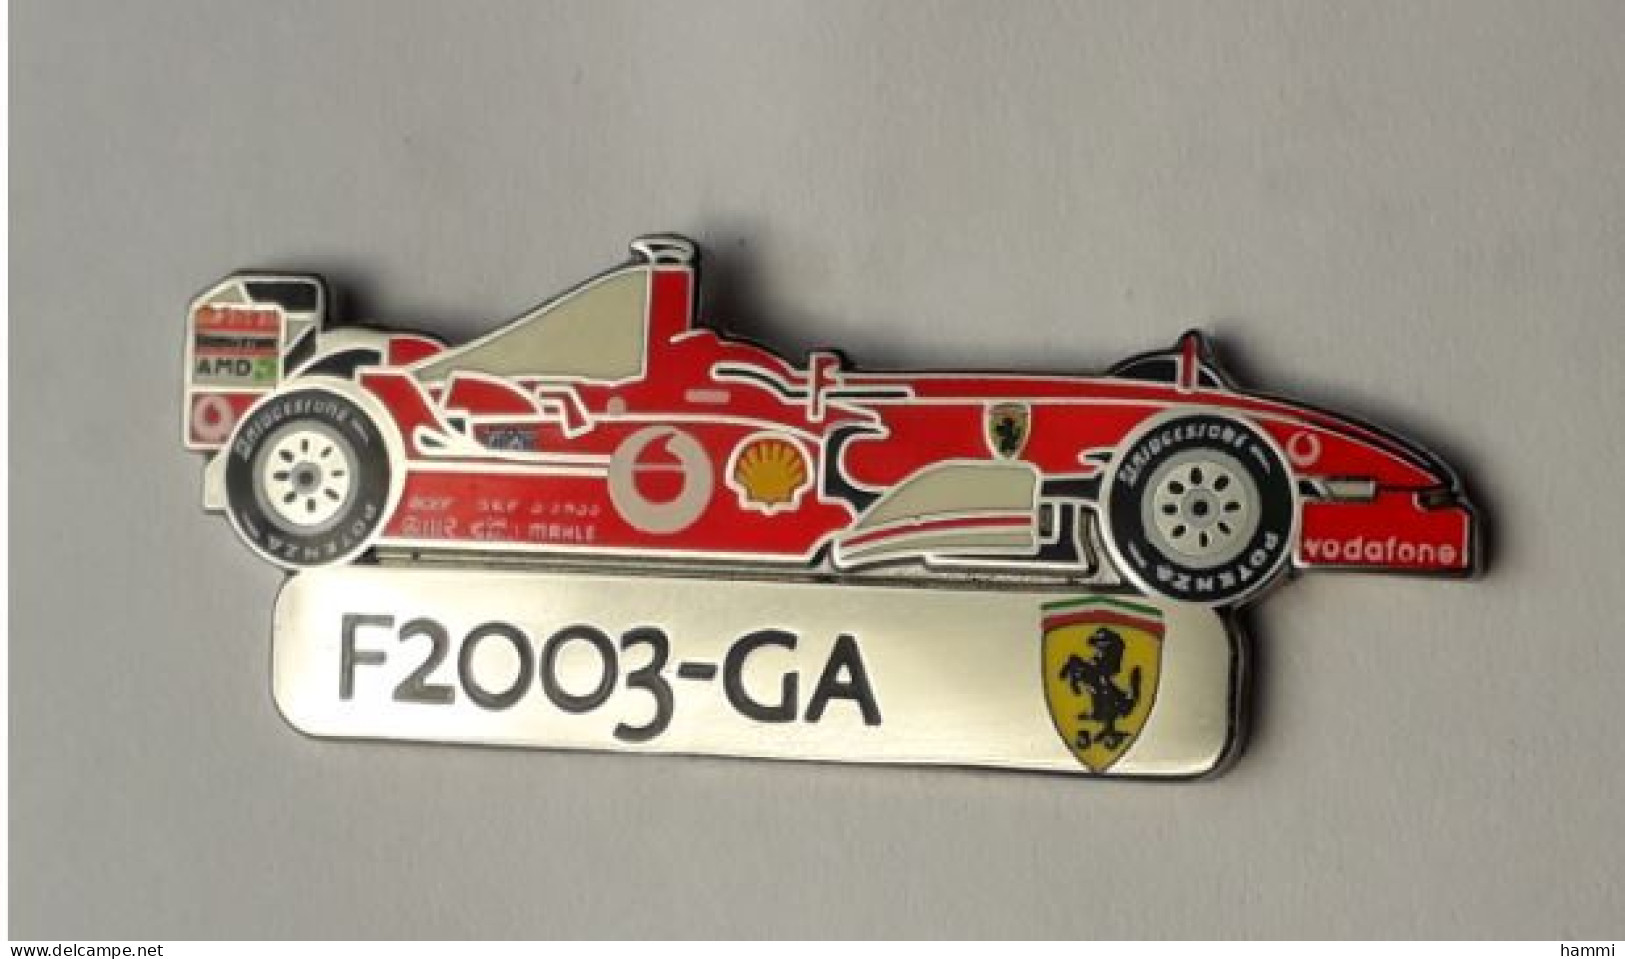 L376 Pin's Ferrari Officiel F2003-GA SUPERBE Qualité Egf Signé Bolaffi 40 Mm X 15 Mm Achat Immédiat Immédiat - Ferrari